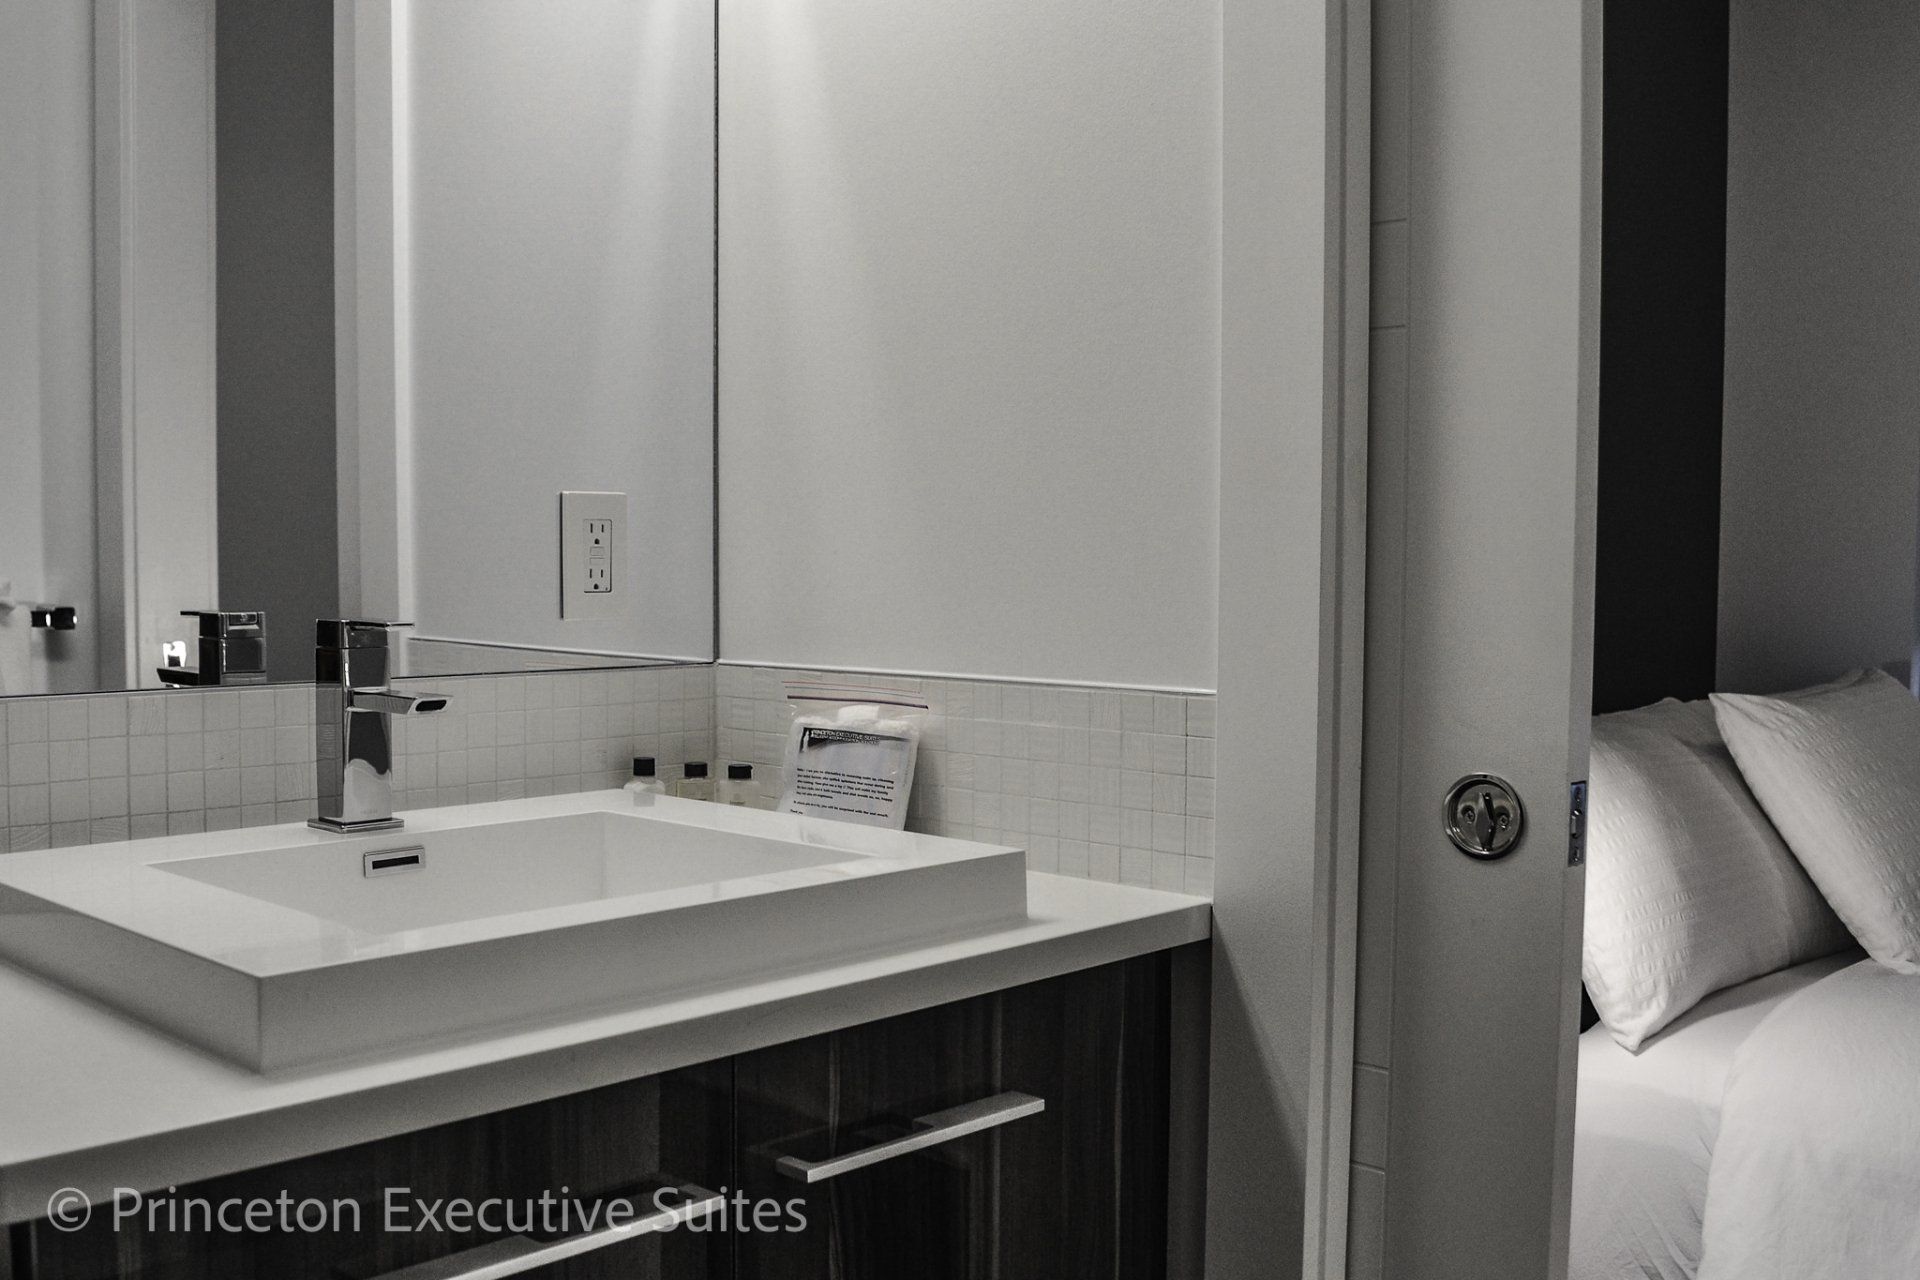 Black and grey vanity in this bathroom of a modern executive suite in Edmonton